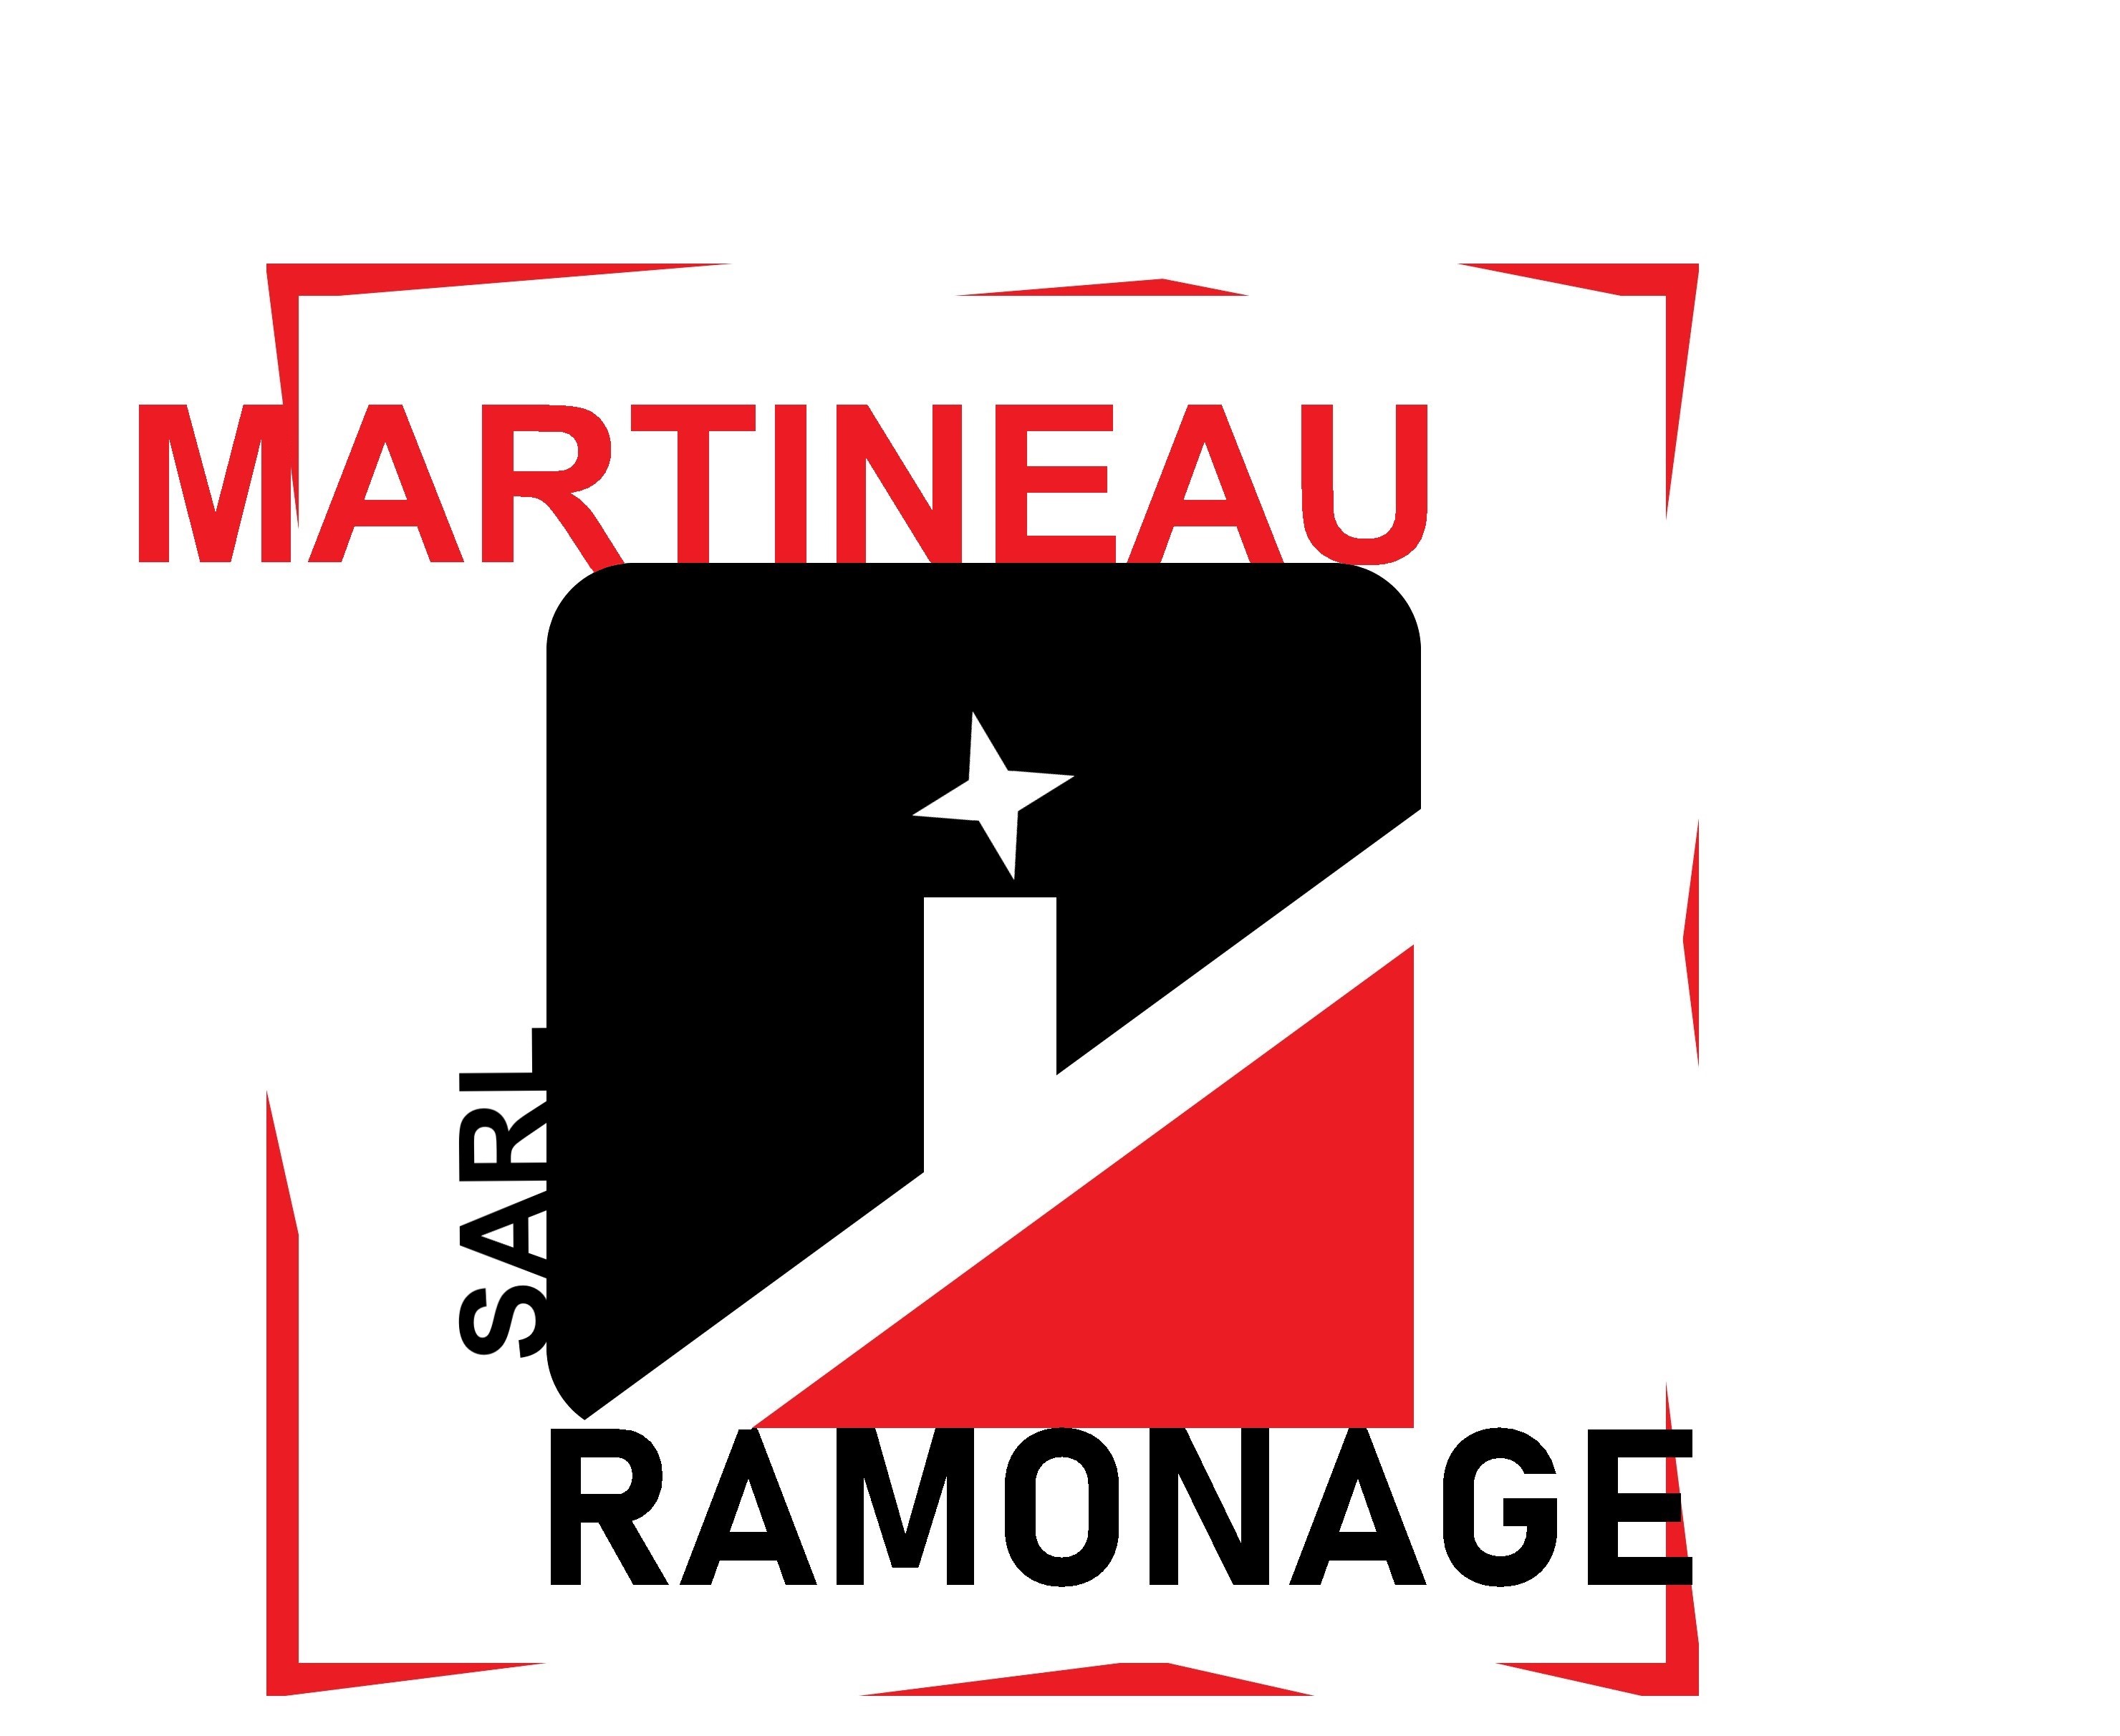 Martineau Ramonage